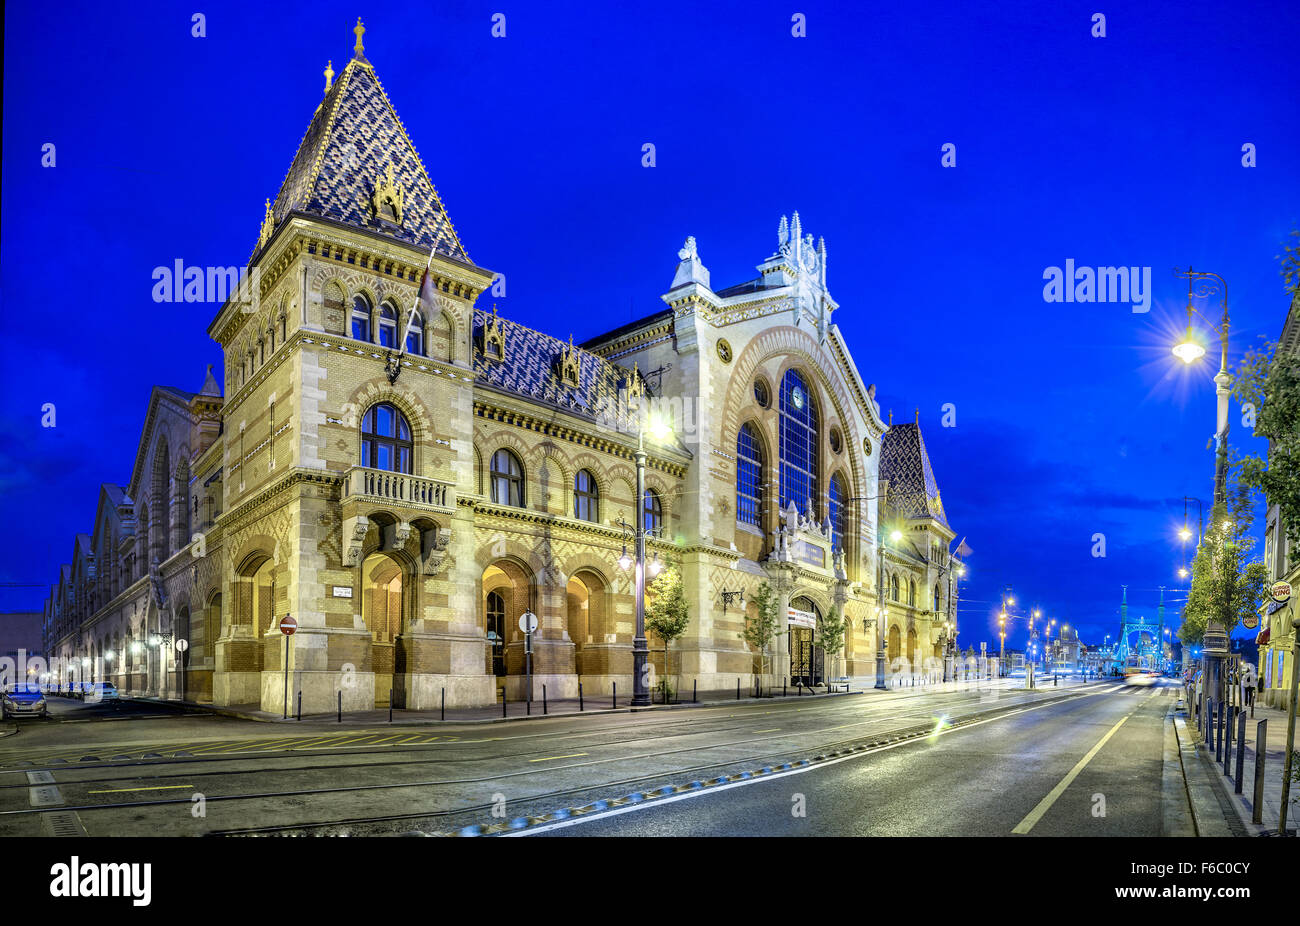 La Grande Halle, Nagycsarnok, Budapest, Hongrie Banque D'Images